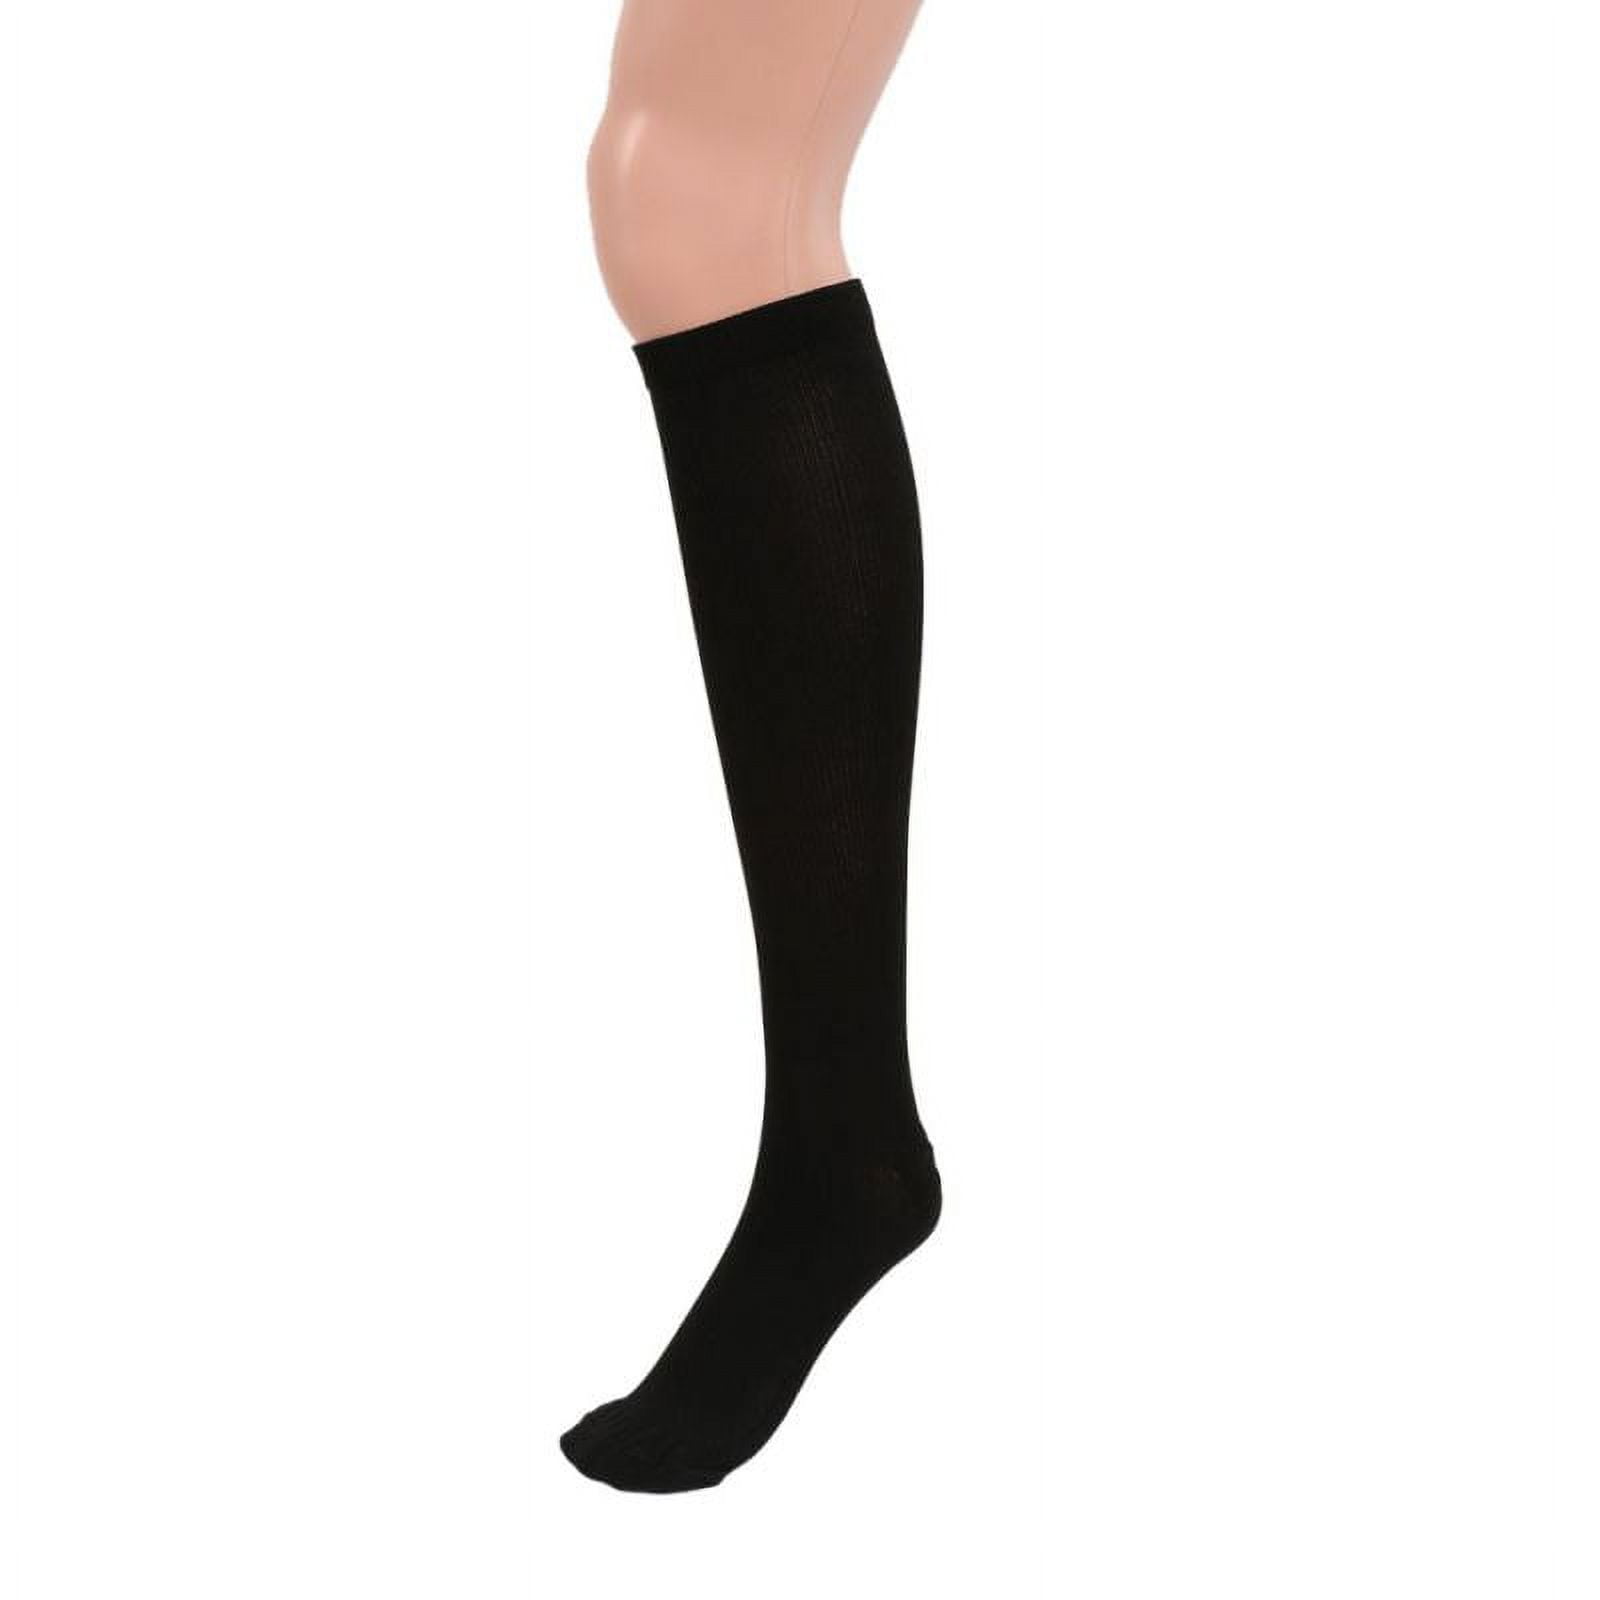 1 Pair Knee High Graduated Compression Socks for Men & Women - BEST  Stockings for Running, Medical, Athletic, Diabetic, Swelling, Varicose  Veins, Travel, Pregnancy, Shin Splints, Nurse 